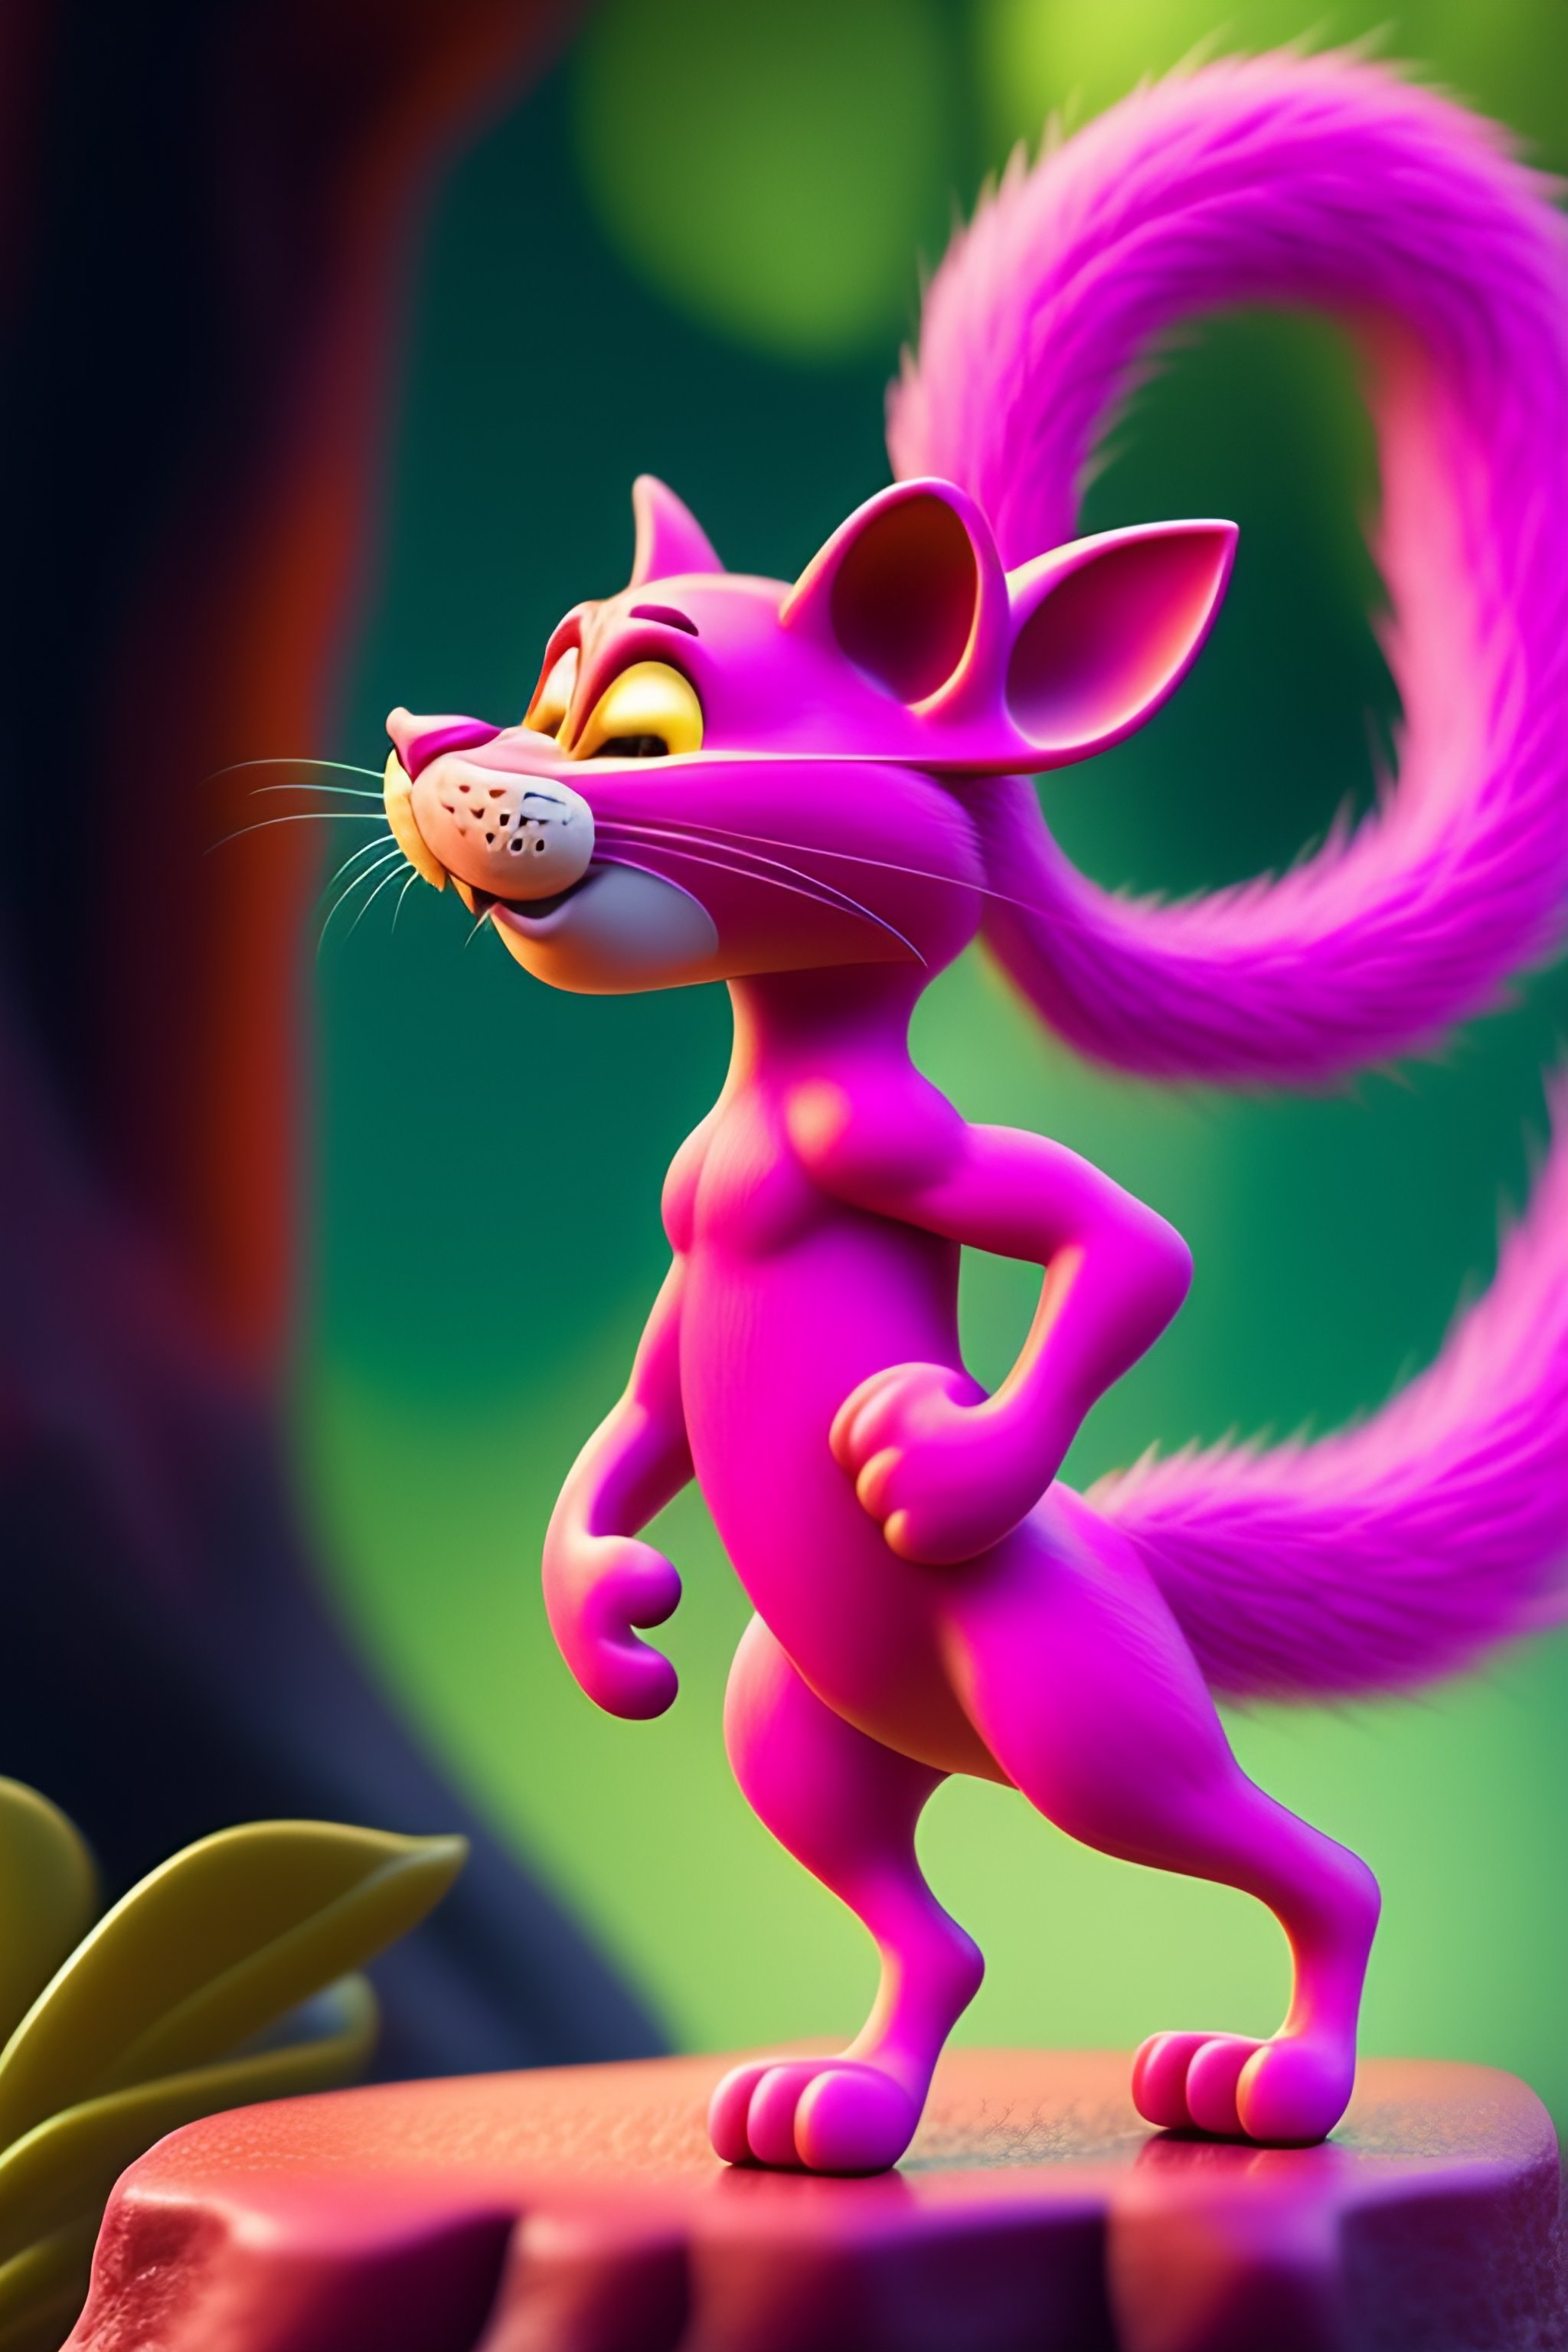 Panther in Tuxedo Pink Wallpaper - Pink Panther Wallpaper iPhone